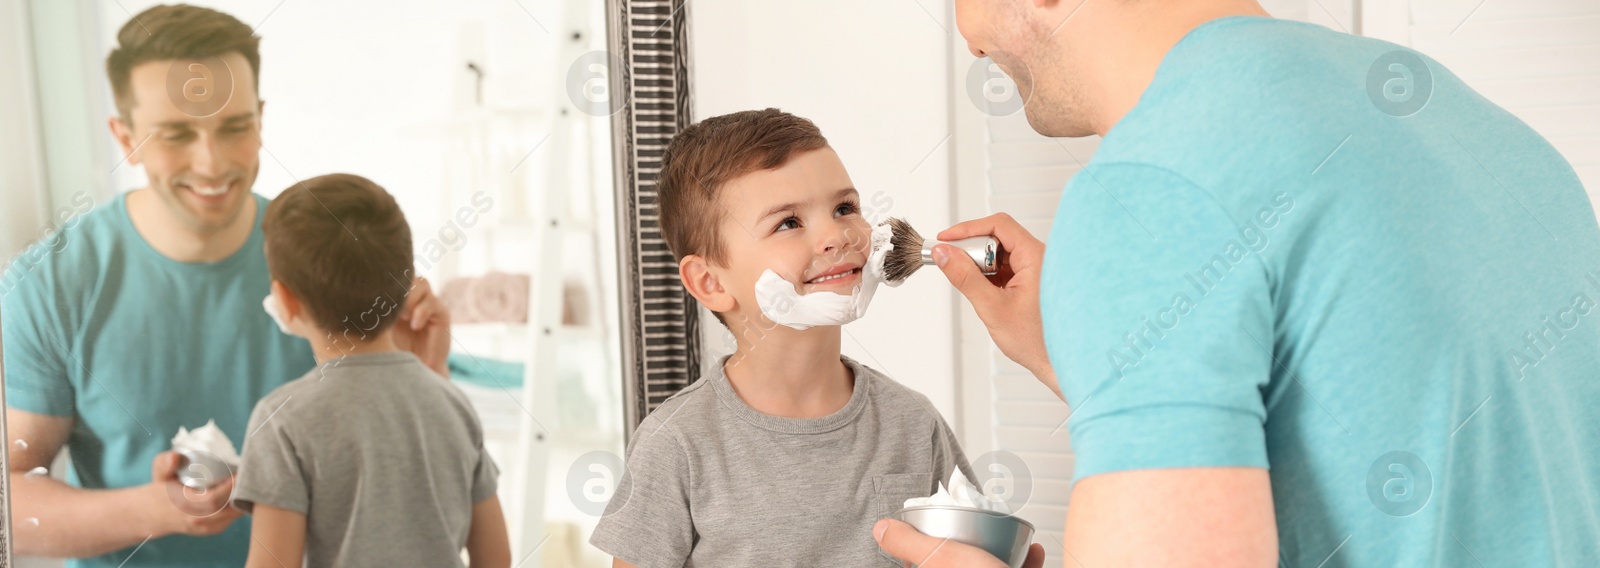 Image of Dad applying shaving foam onto son's face in bathroom. Banner design